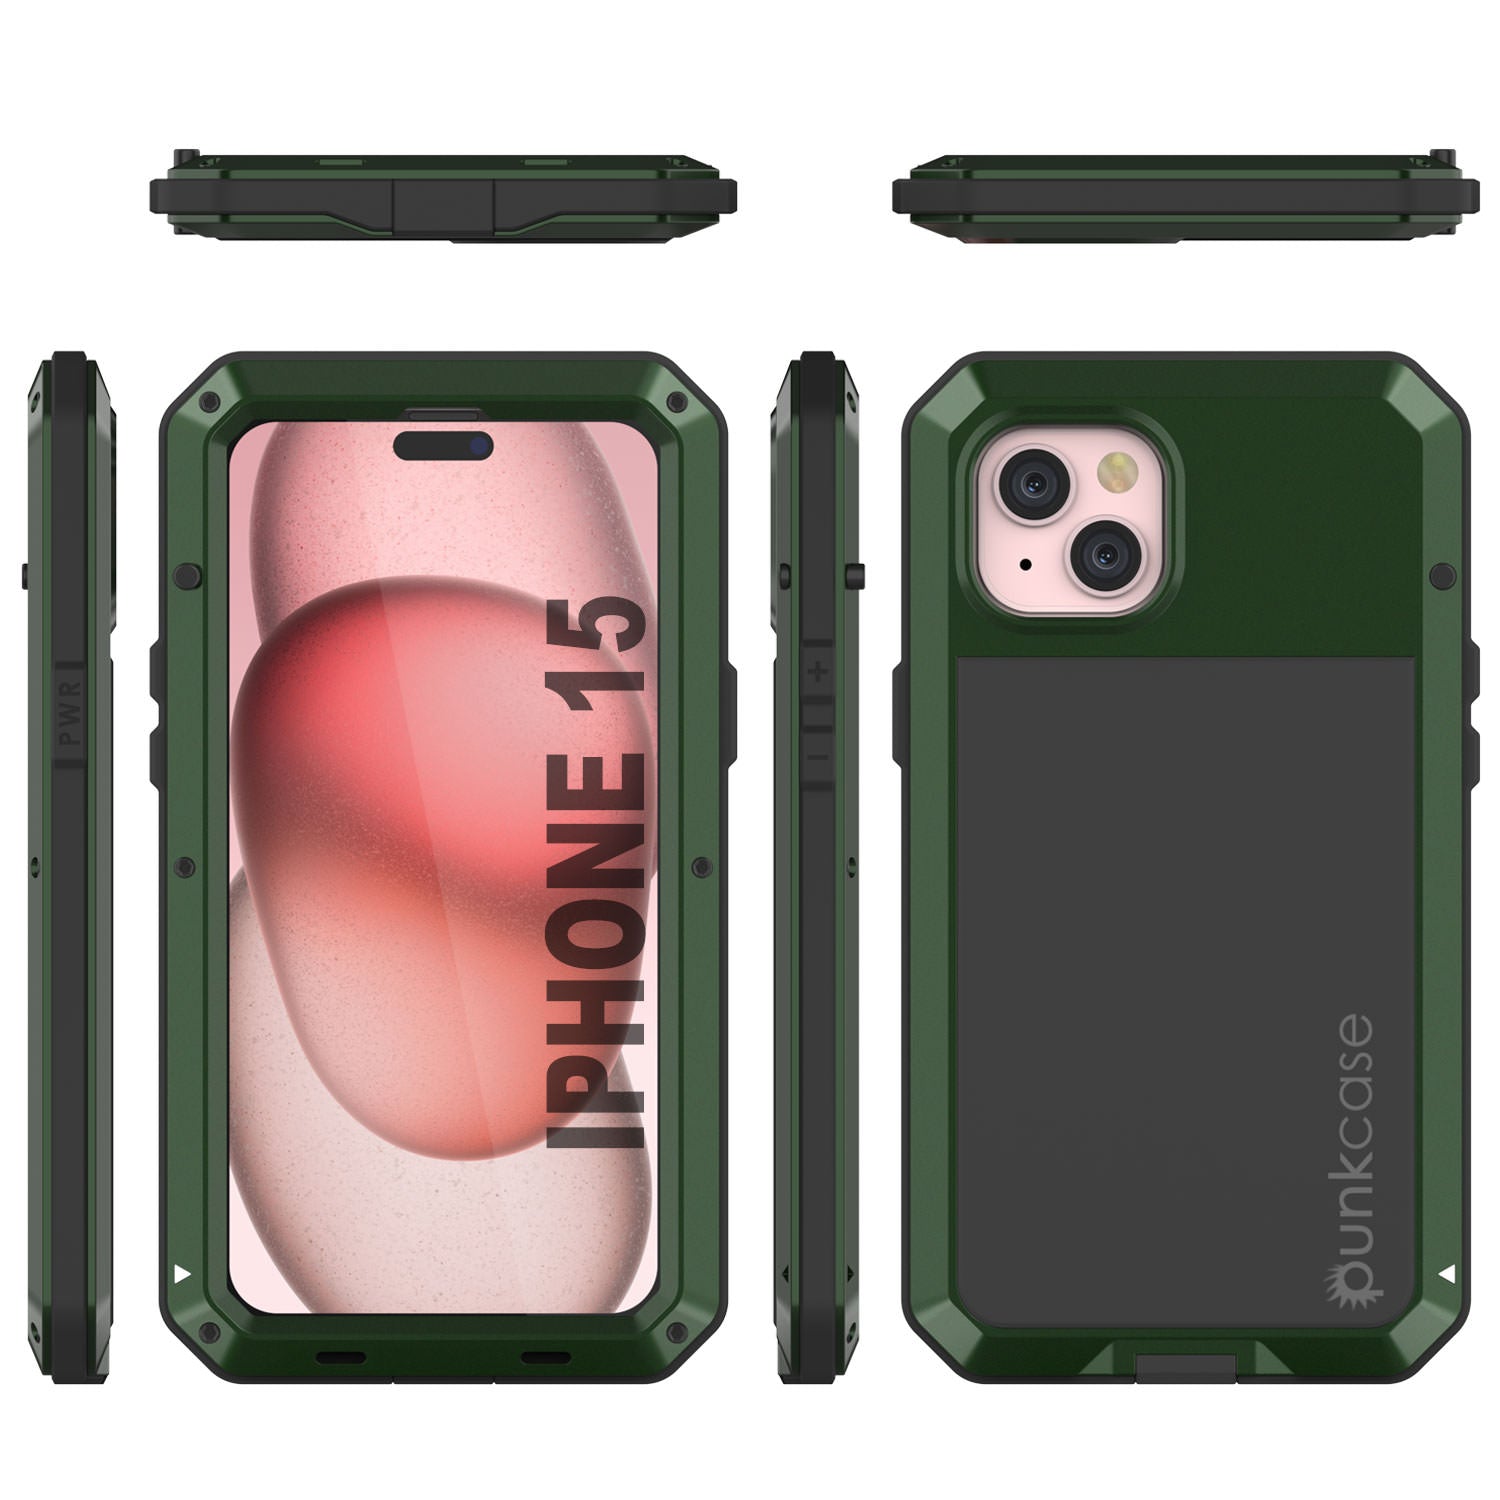 iPhone 15 Metal Case, Heavy Duty Military Grade Armor Cover [shock proof] Full Body Hard [Dark Green]